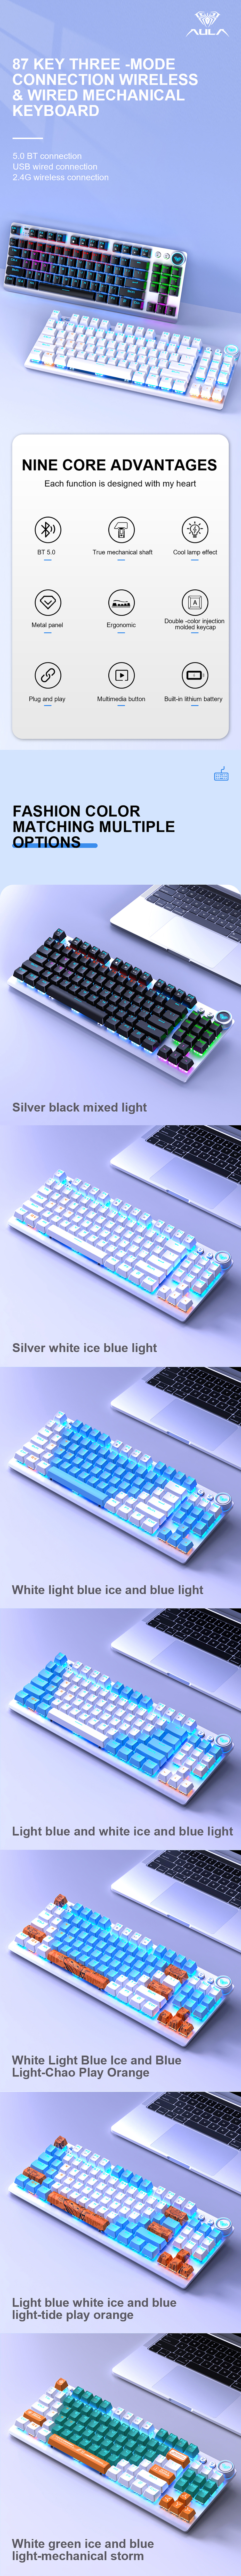 AULA F3001 Three-mode(2.4G+Bluet+Wired) mechanical keyboard Mechanical Gaming Keyboard (图1)